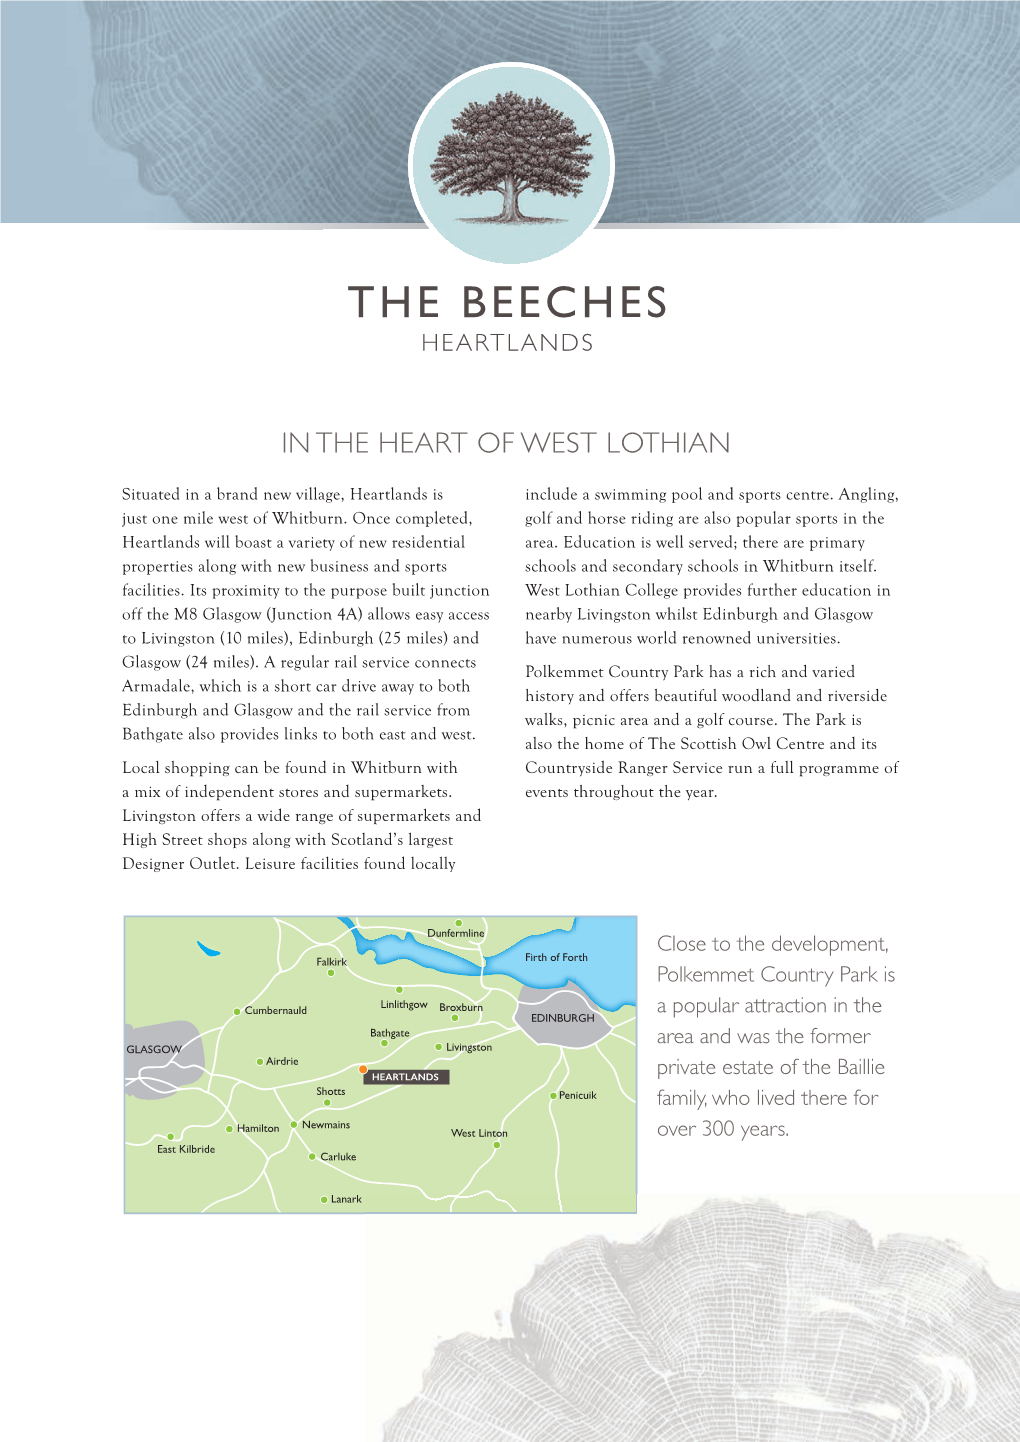 The Beeches Heartlands